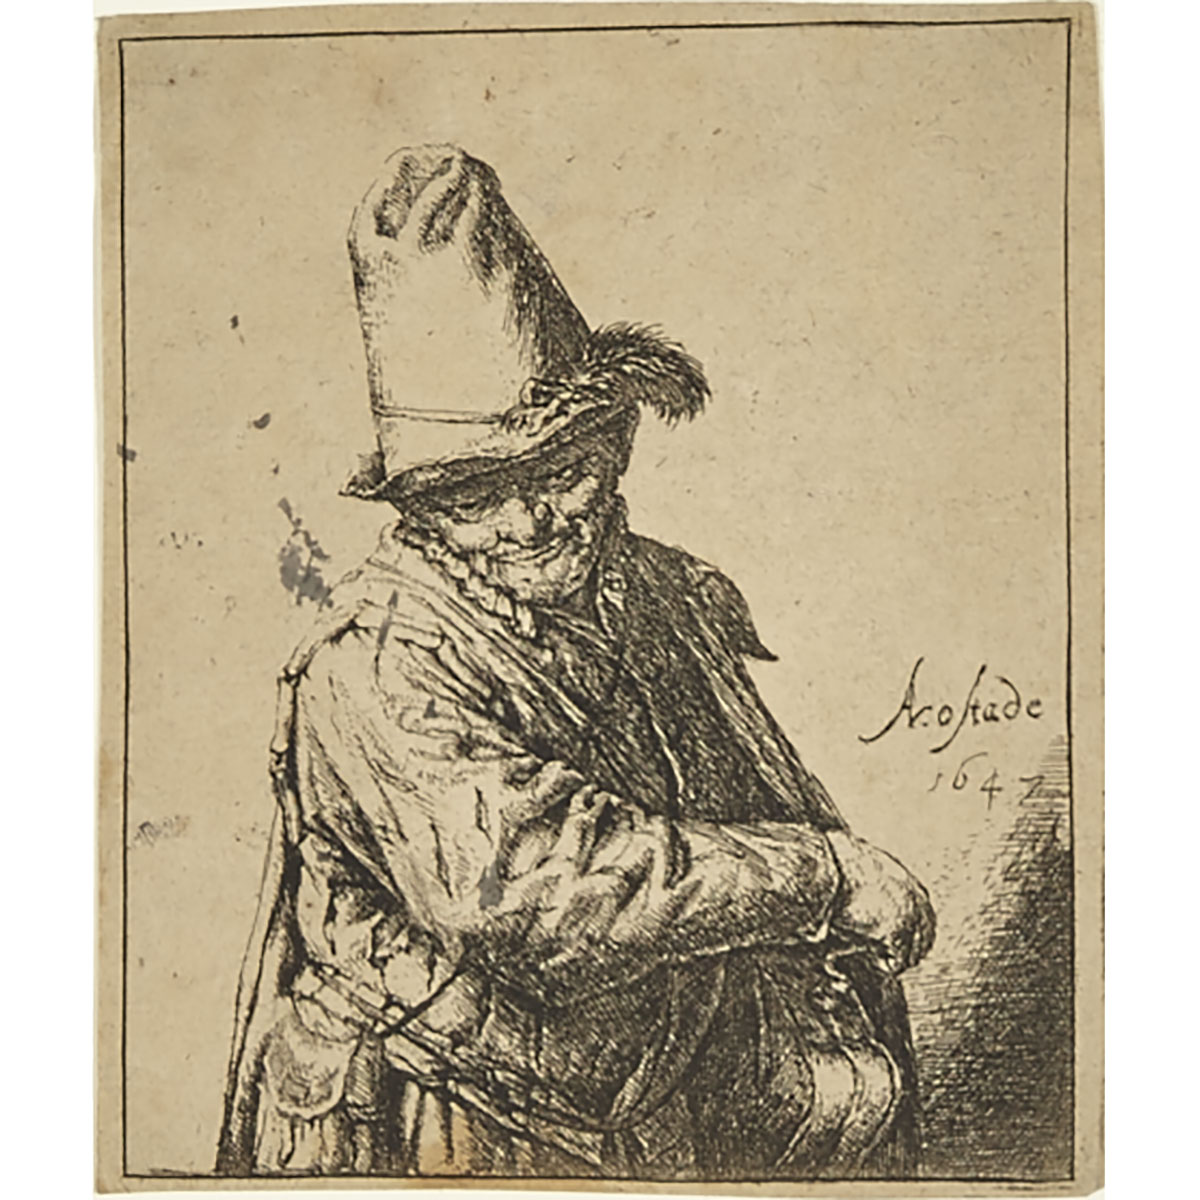 ADRIAEN JANSZ VAN OSTADE (1610-1685)